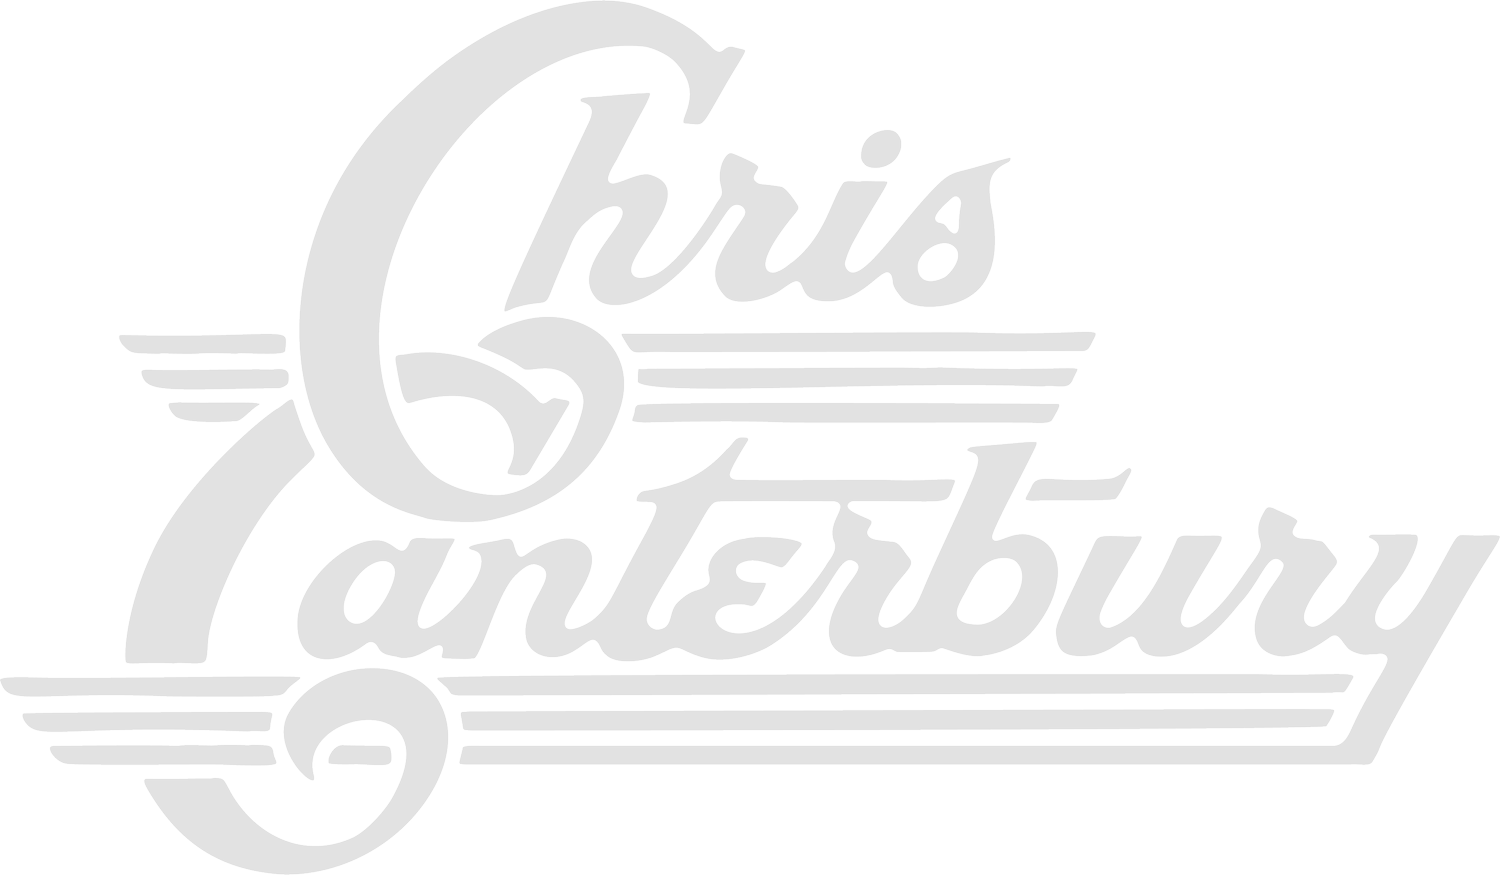 Chris Canterbury